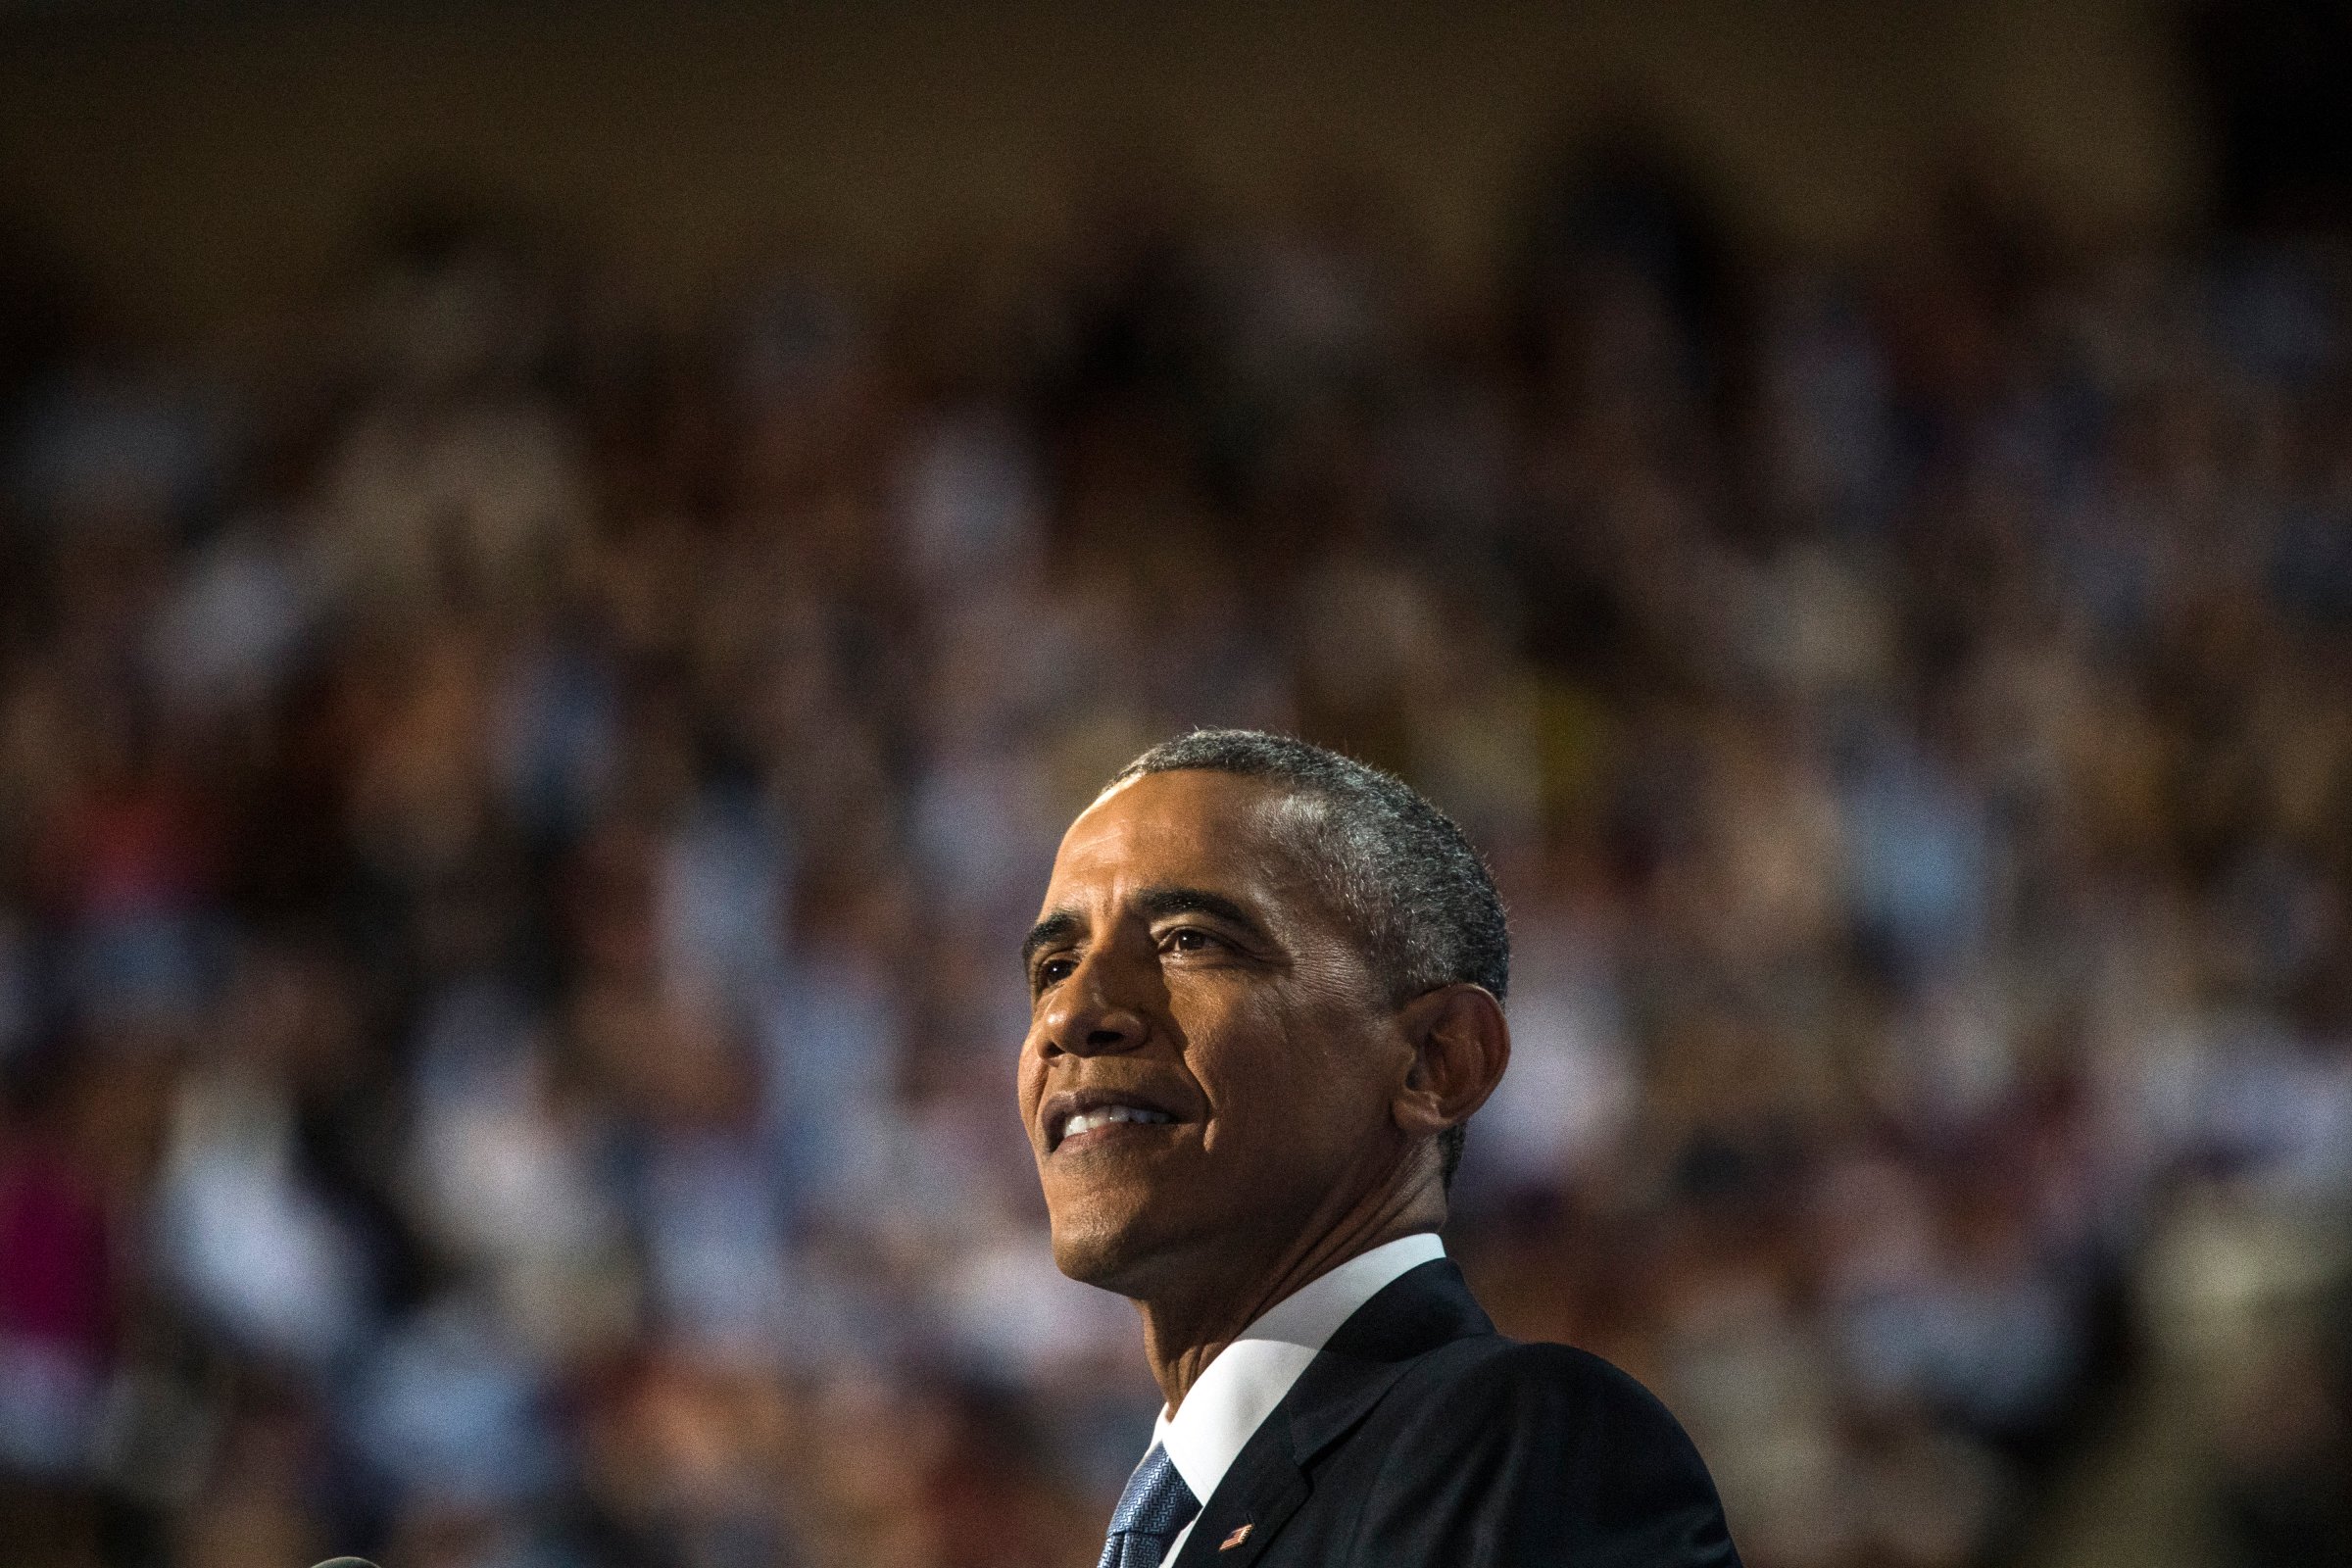 President Barack Obama speaks at the Democratic National Convention in Philadelphia on July 27, 2016.